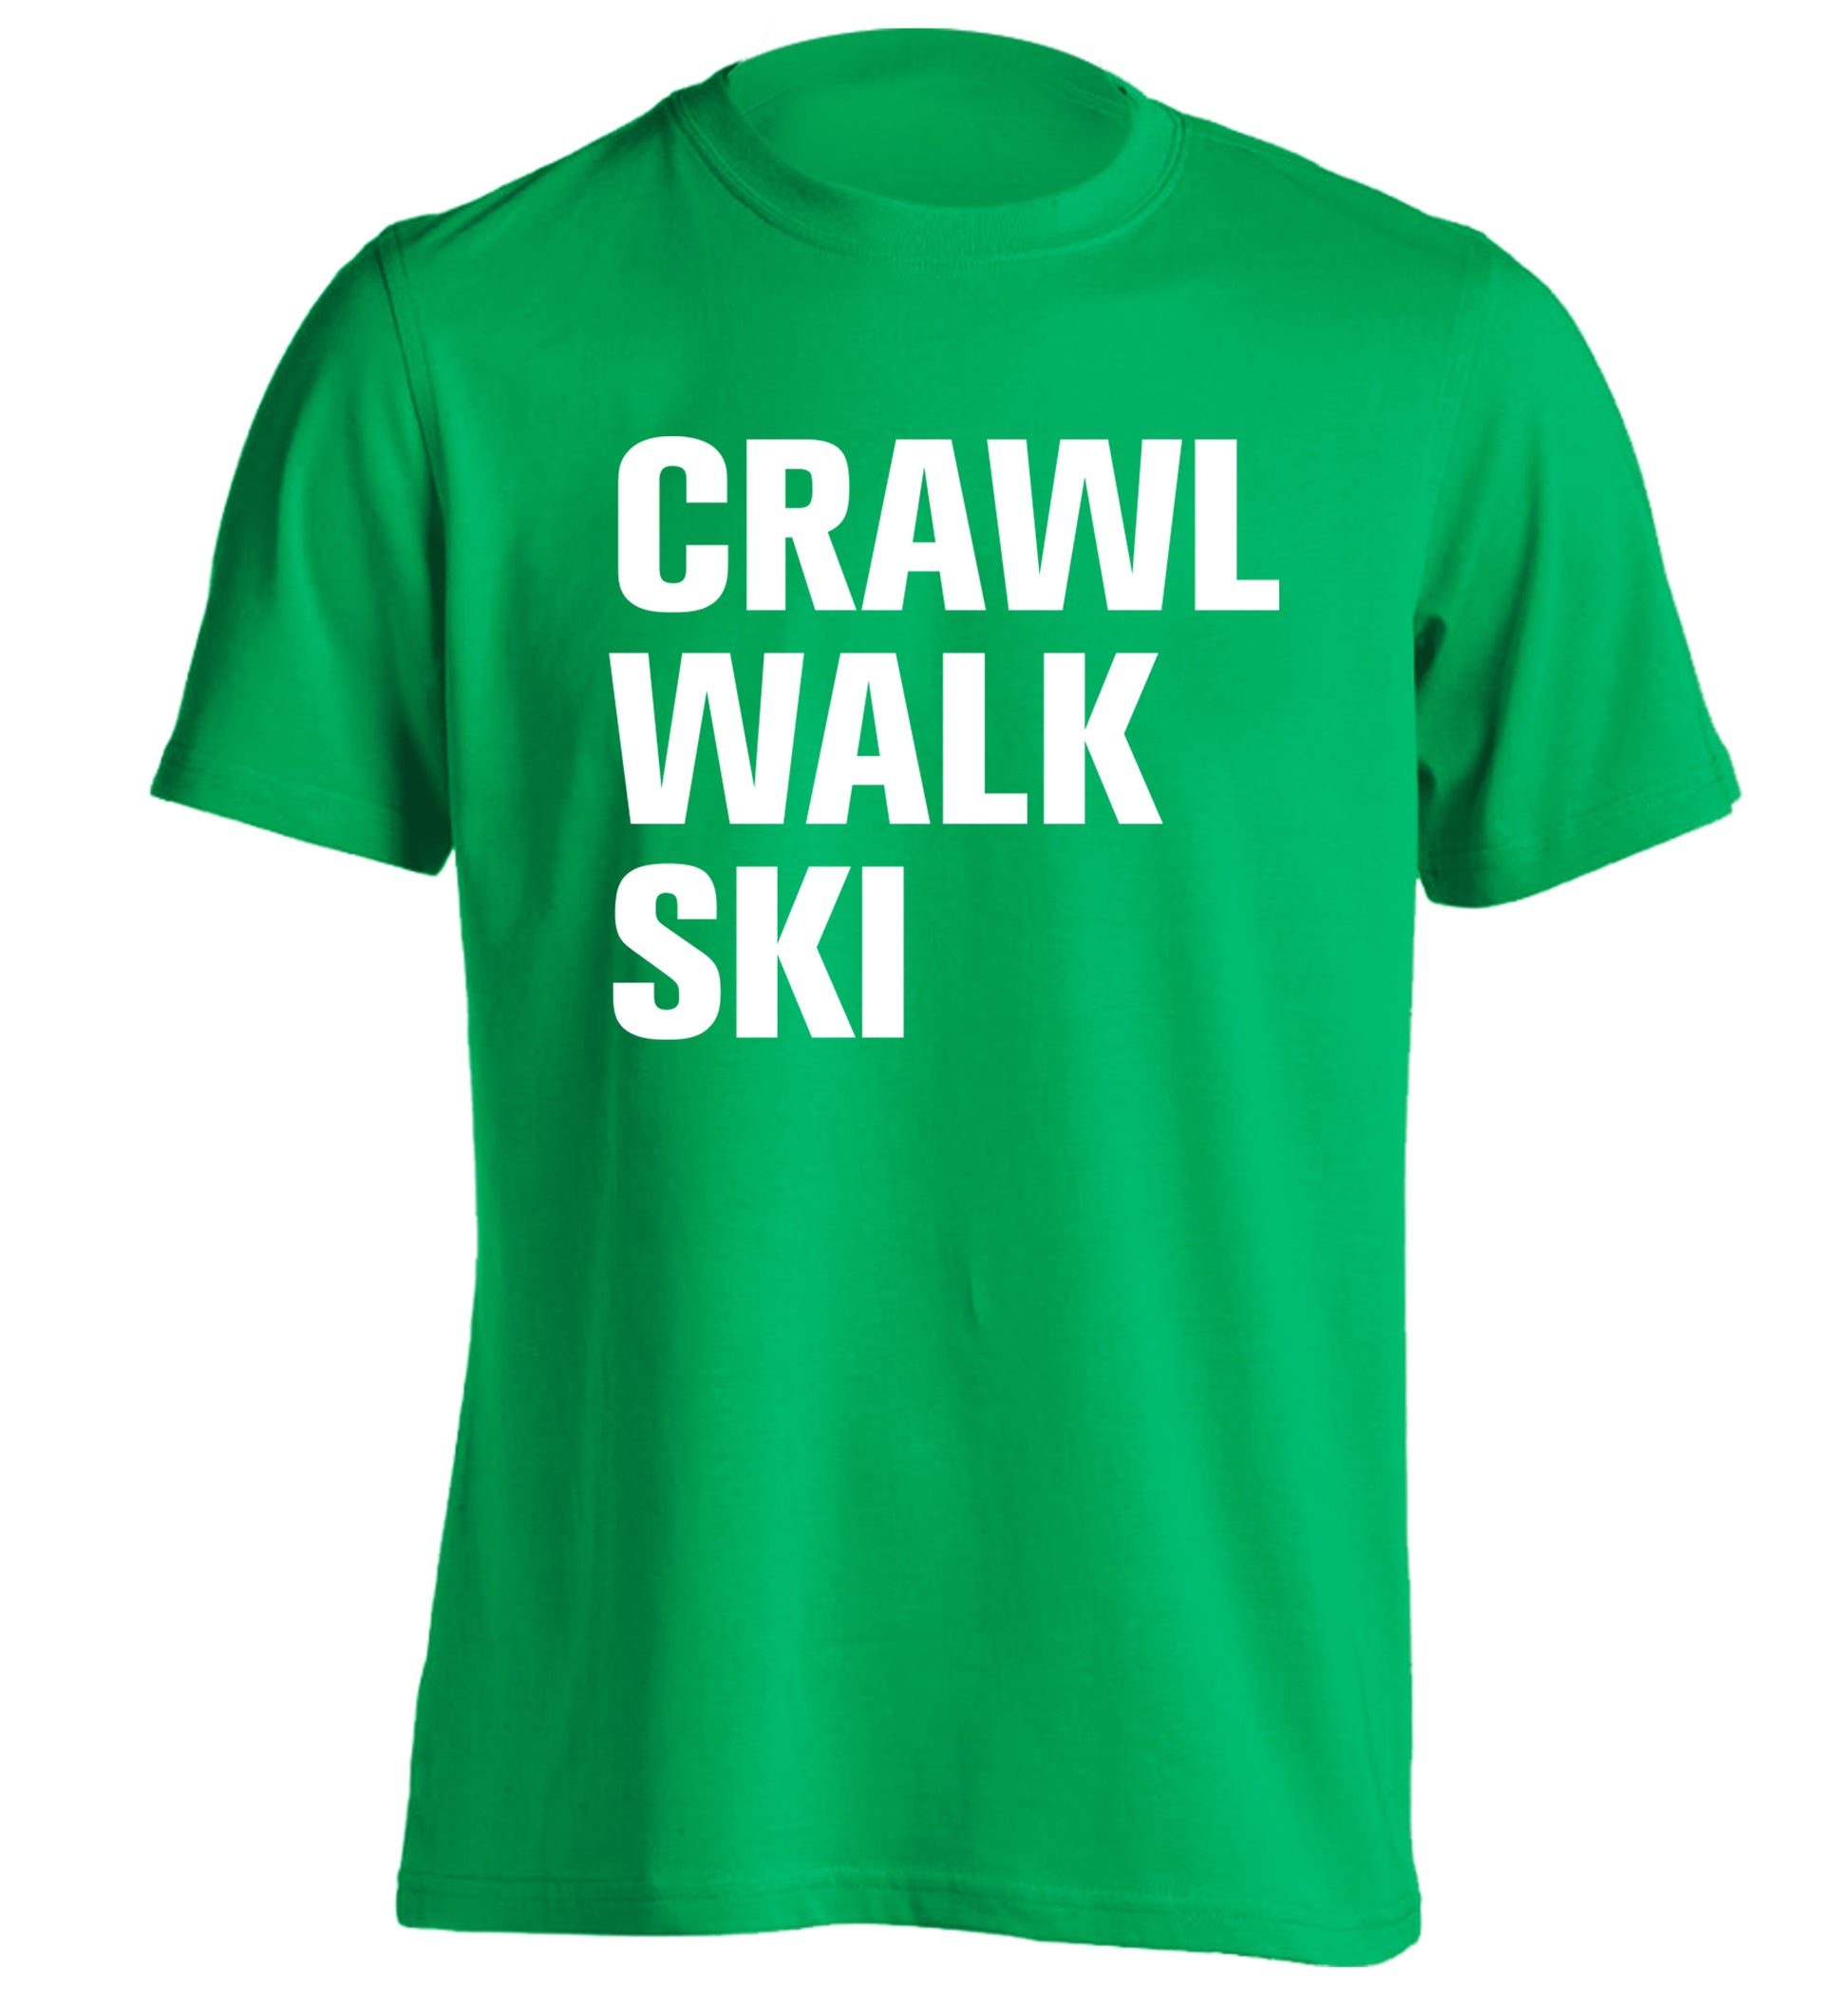 Crawl walk ski adults unisexgreen Tshirt 2XL